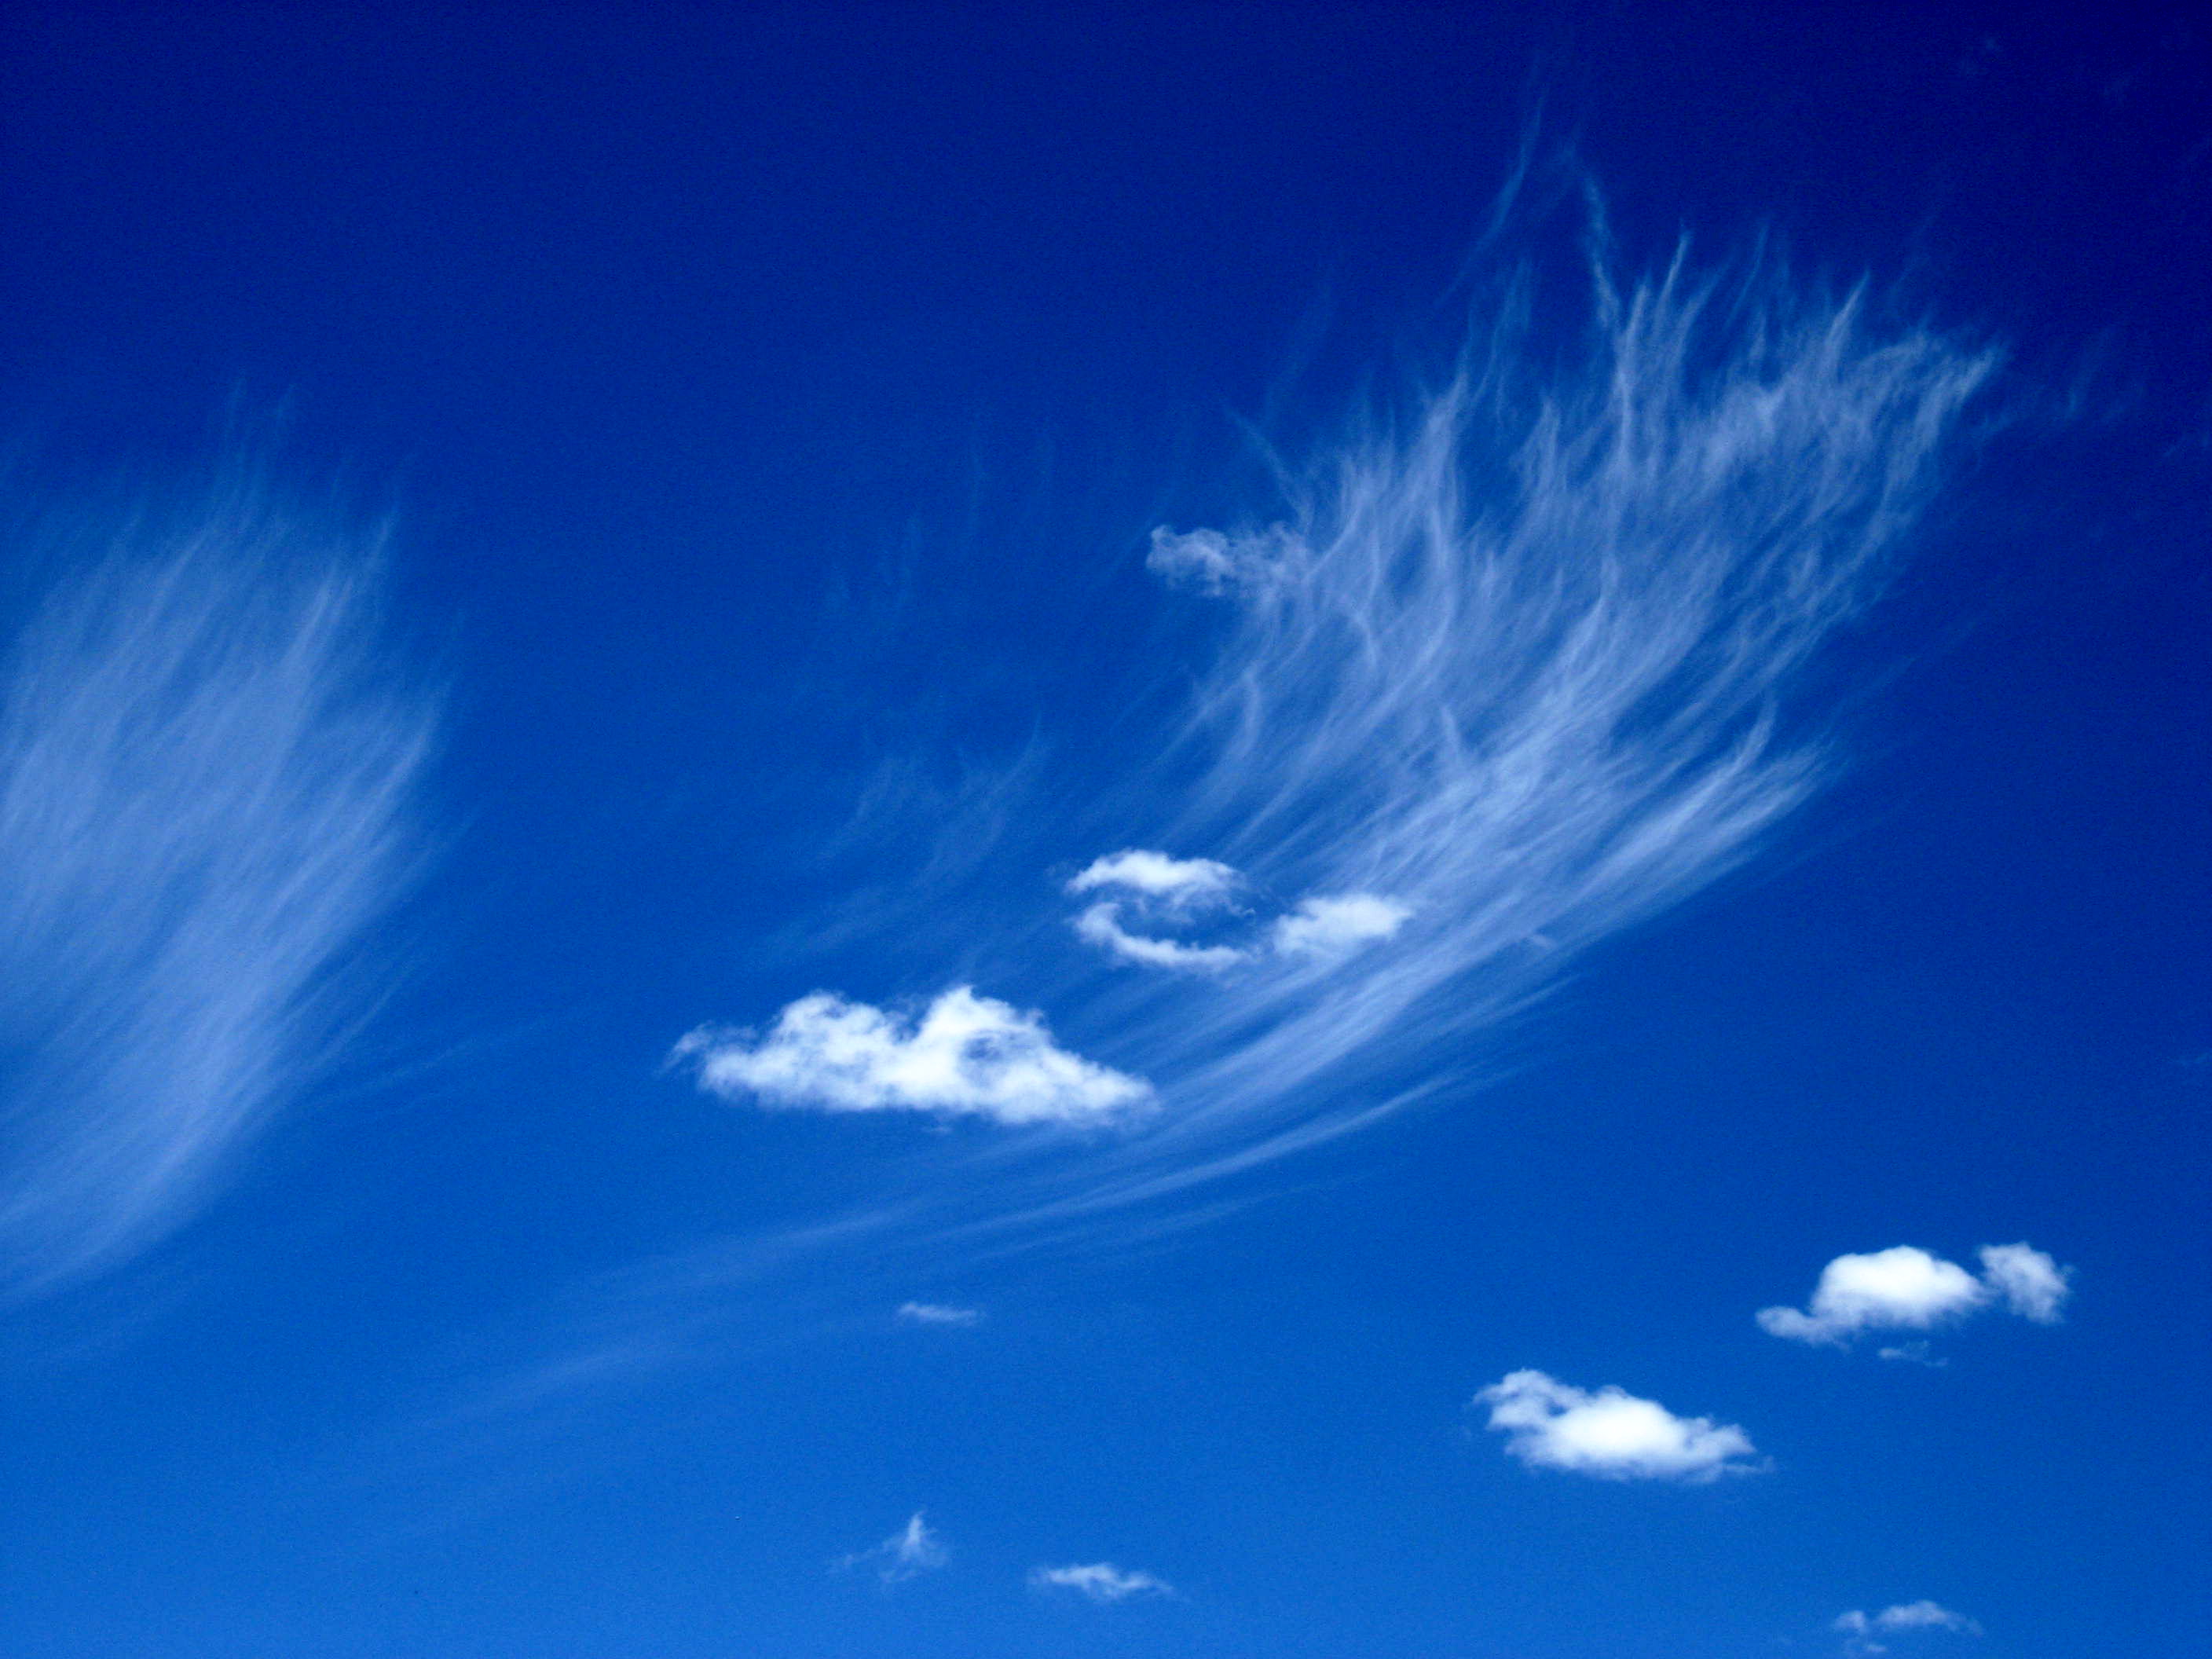 Sky, clouds, download photo, wallpapers for desktop, download, heart blue wallpaper